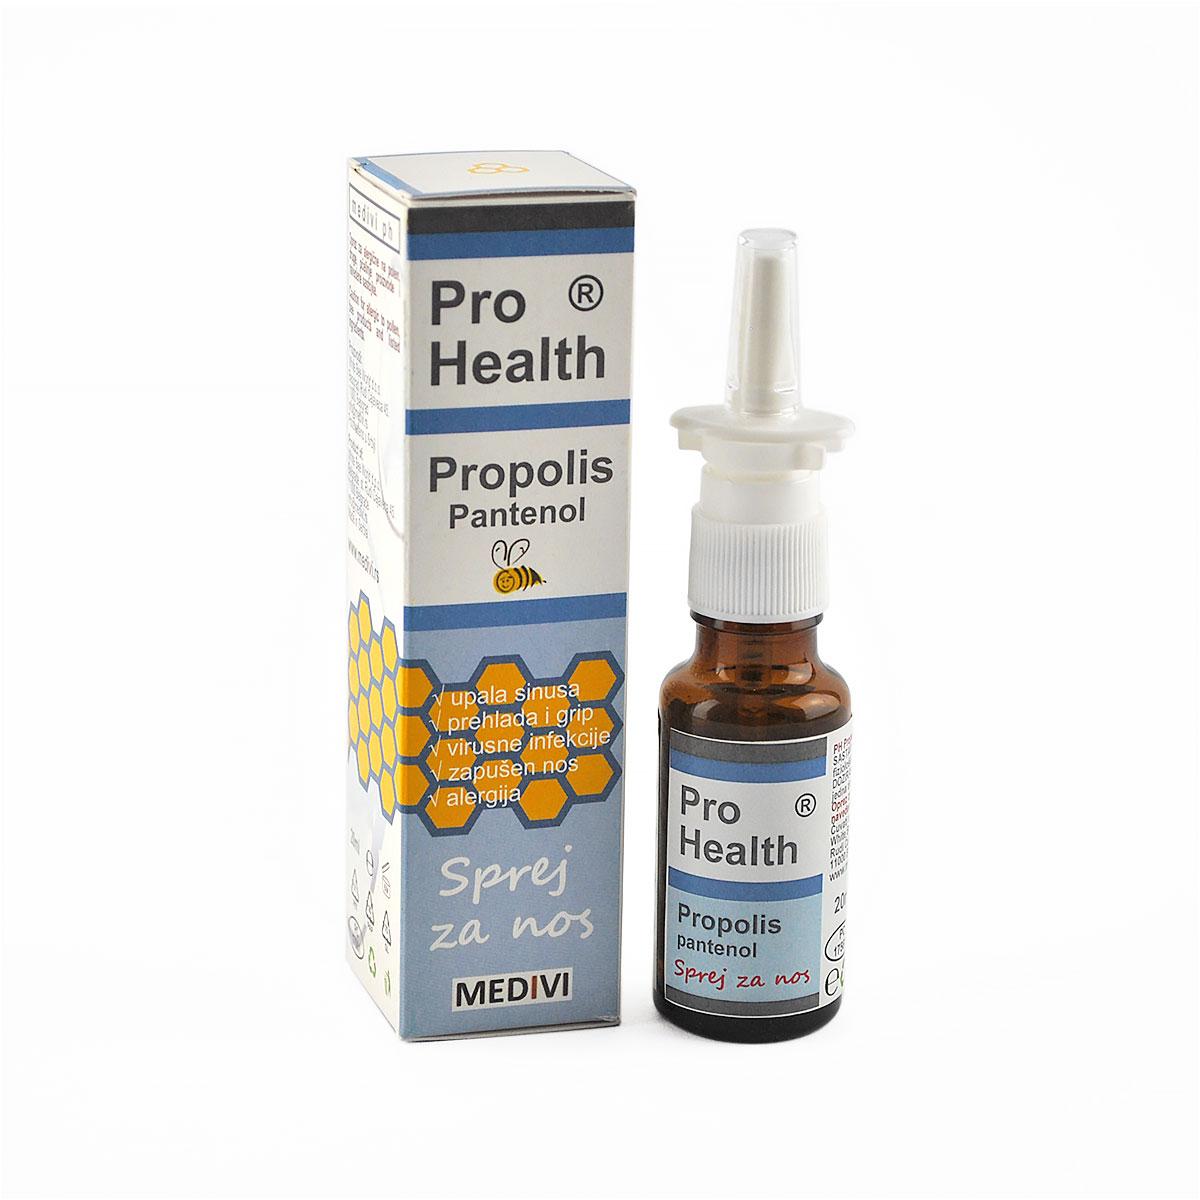 MEDIVI Propolis Pantenol za nos Pro Health 20ml